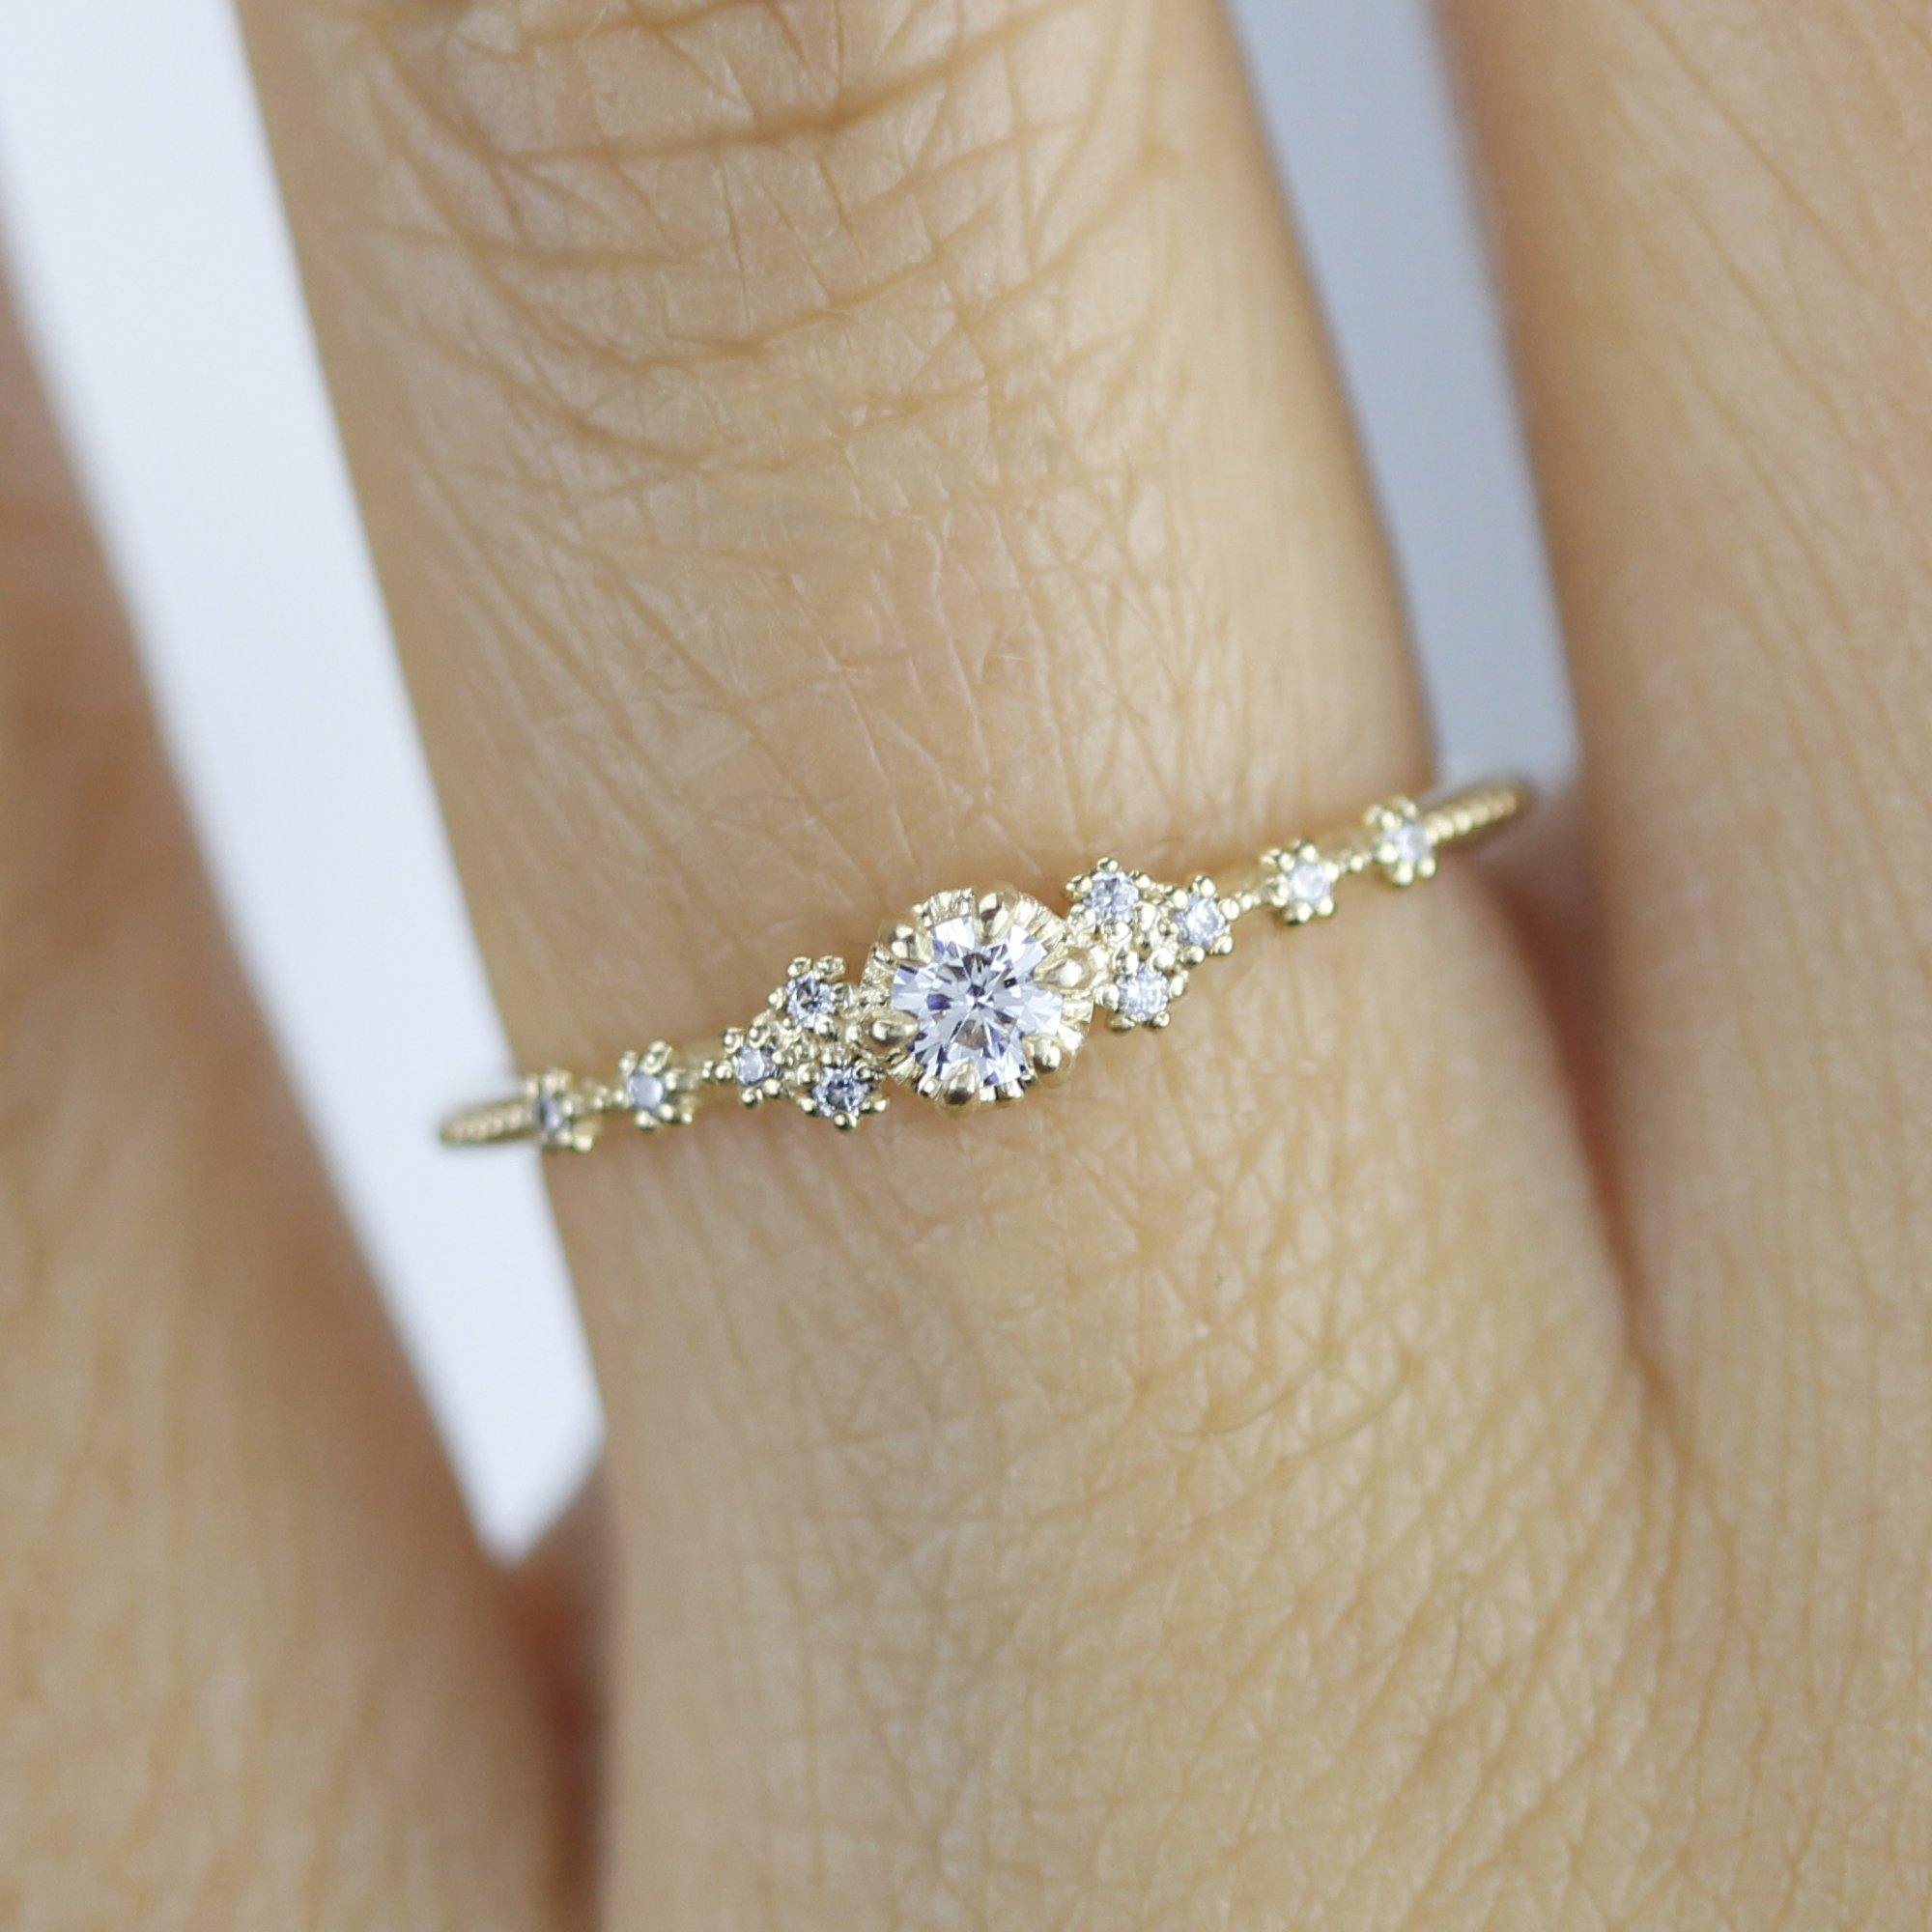 Simple diamond engagement ring, unique engagement ring